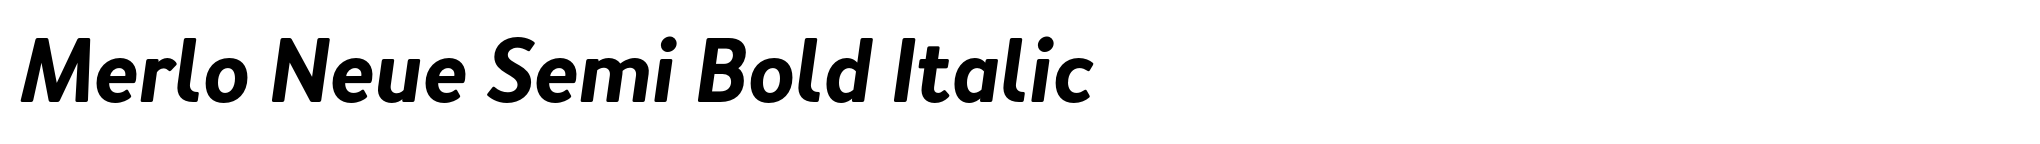 Merlo Neue Semi Bold Italic image